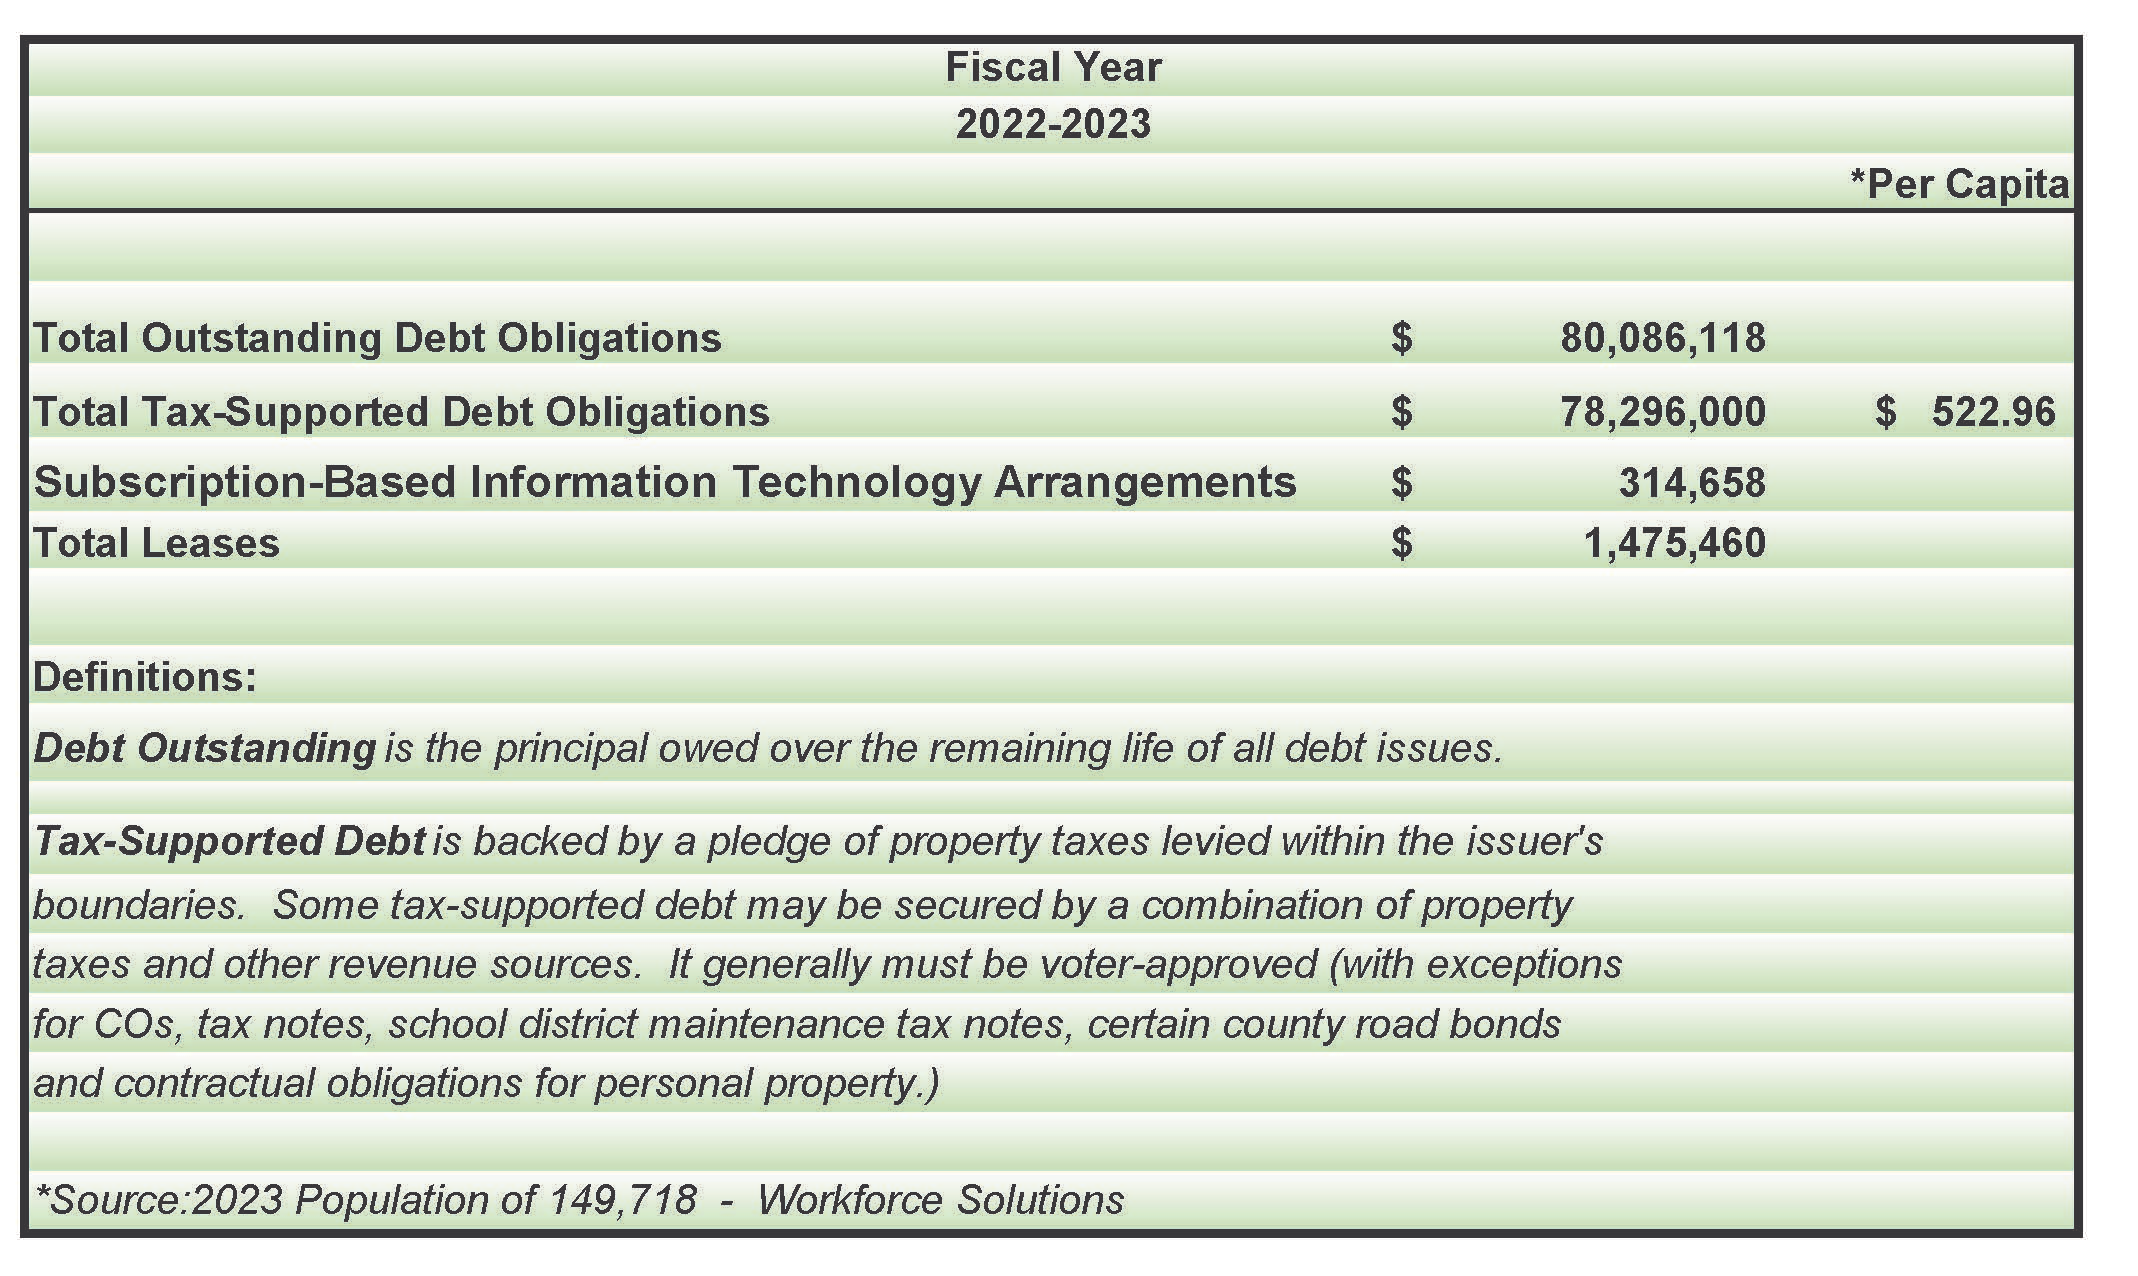 Total Outstanding Debt Obligations